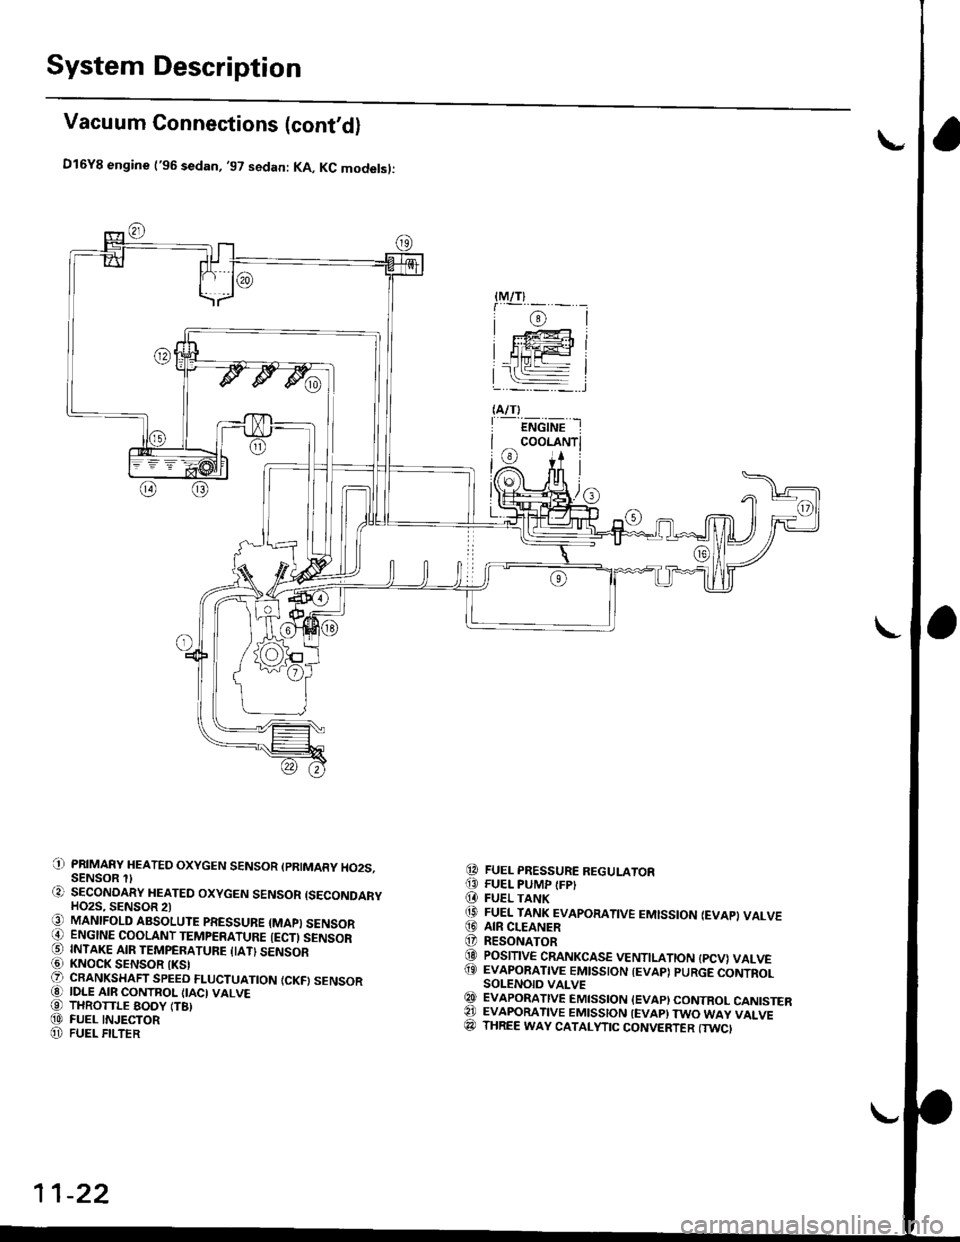 HONDA CIVIC 1996 6.G Workshop Manual System Description
Vacuum Connections (contd)
D16Y8 engine (96 sedan, 97 sedan: KA, KC modelsl:
PRIMARY HEATED OXYGEN SENSOR (PRIMARY HO2S.SENSOR  SECONOARY HEATED OXYGEN SENSOR {SECONDARYHO2S, SEN